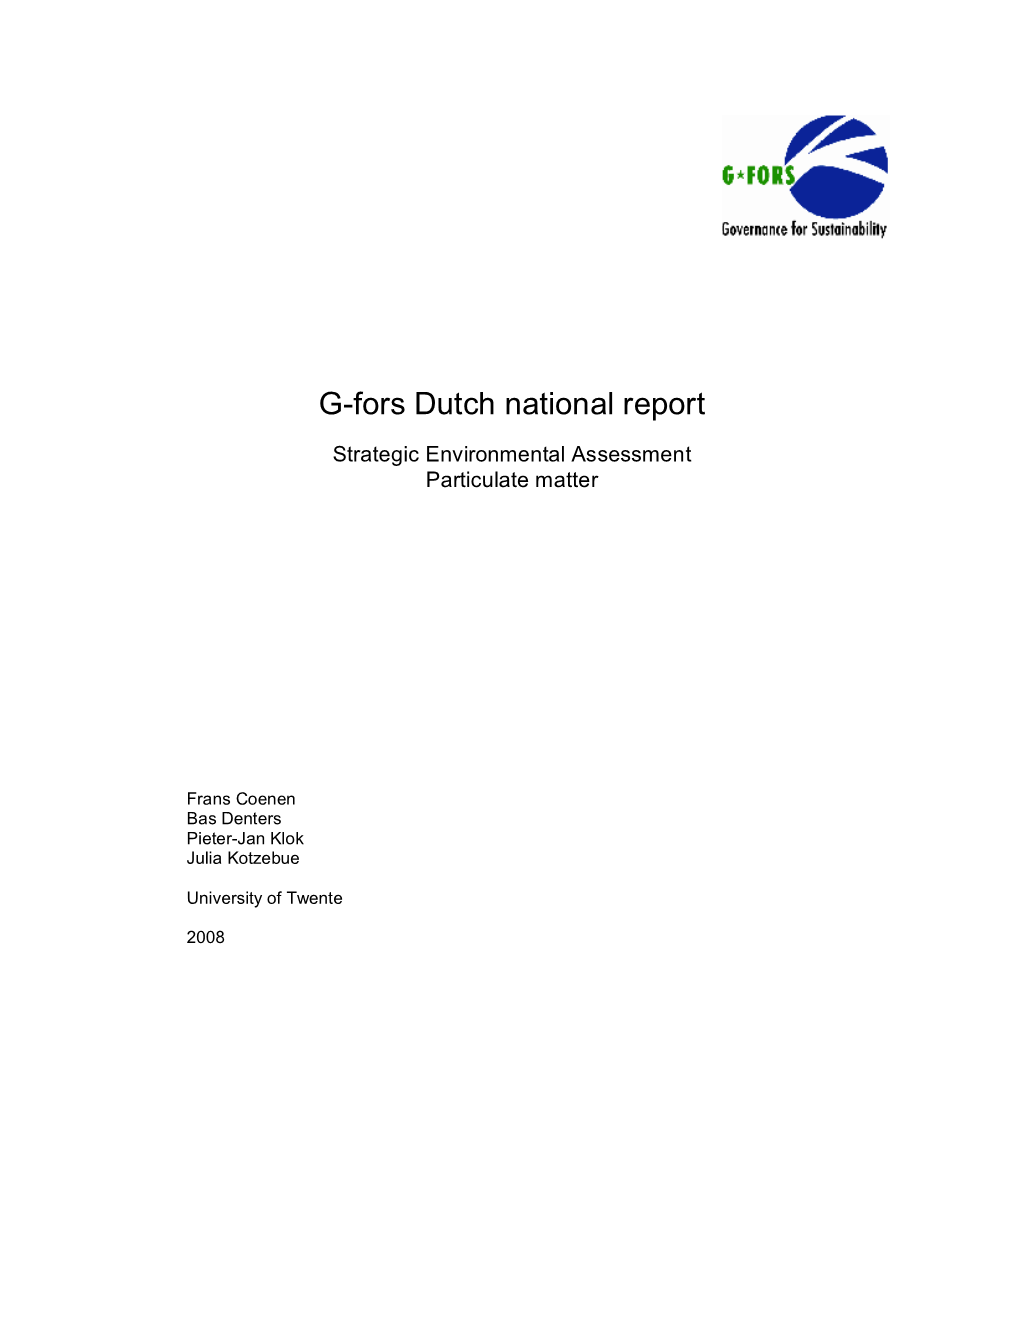 Gfors Dutch National Report